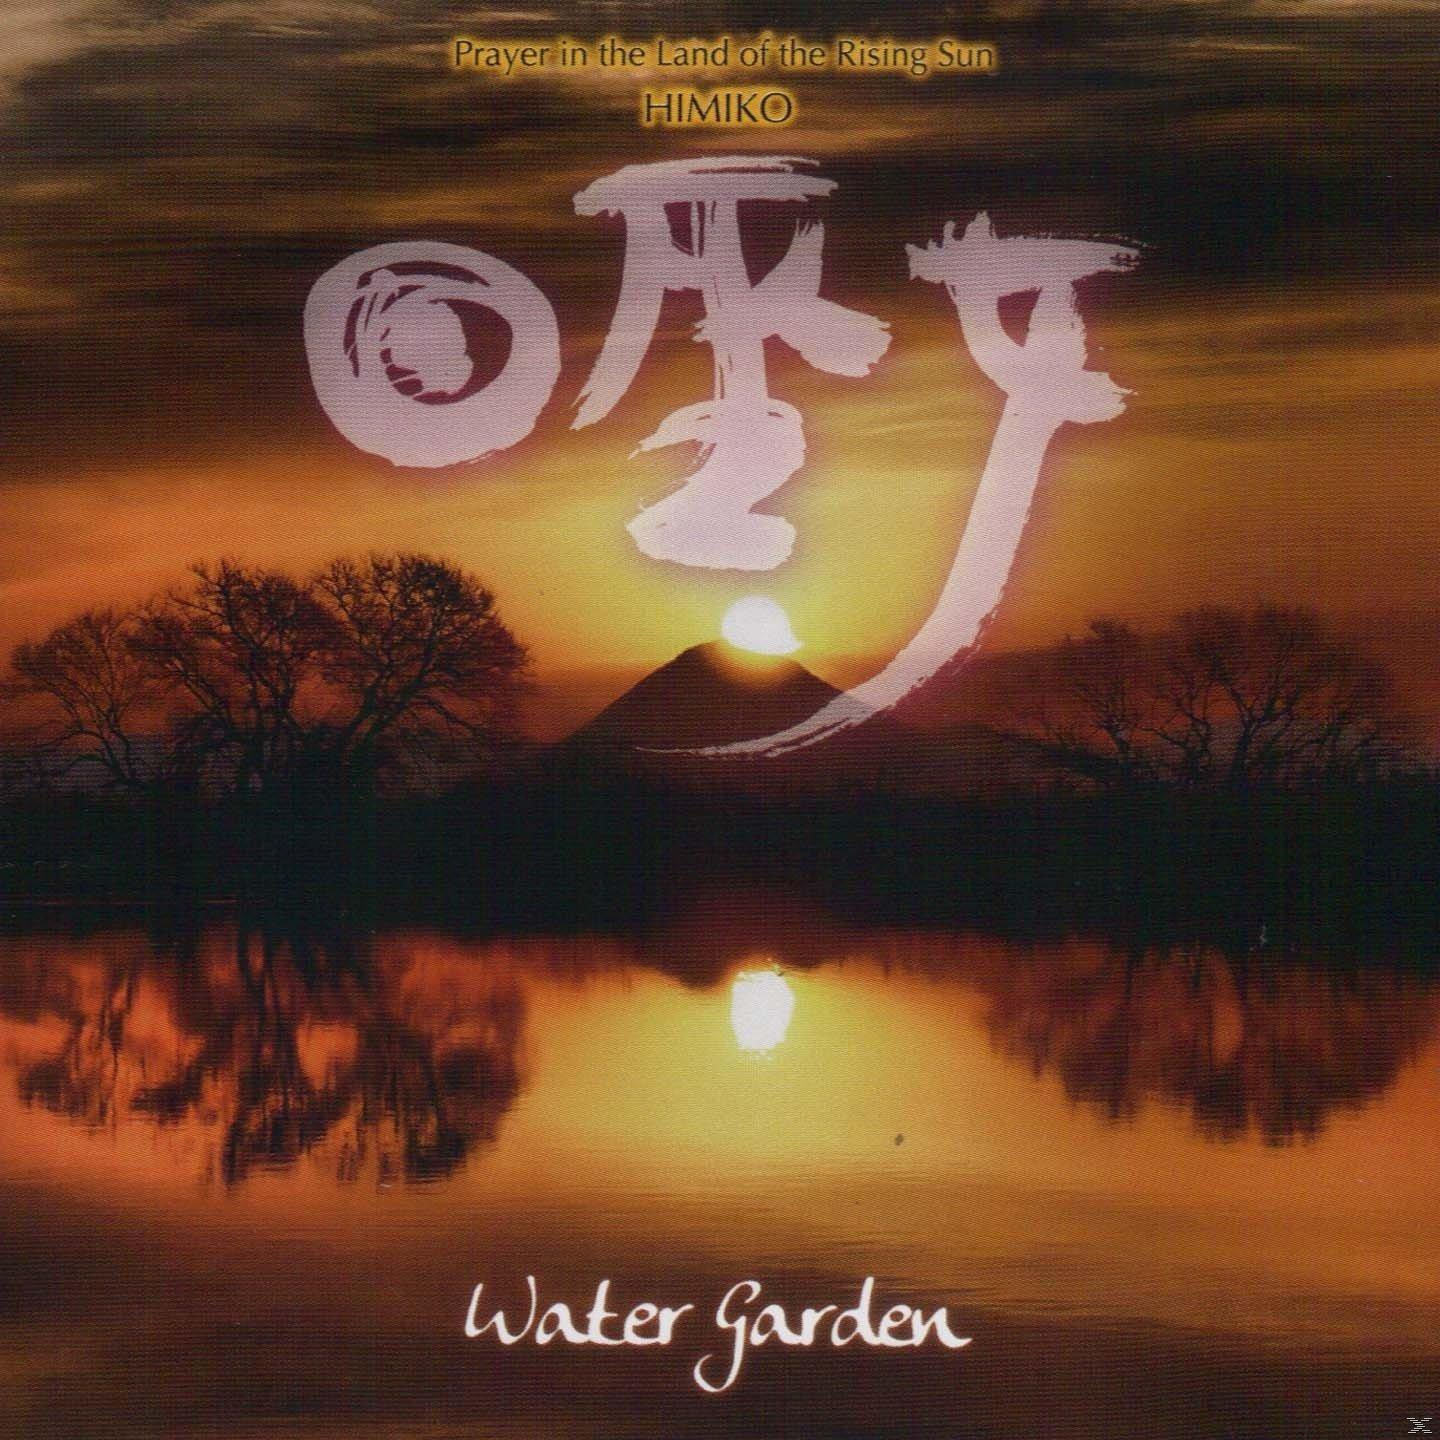 In (CD) The Of Land Garden (Himiko) Water The Prayer Sun - Rising -